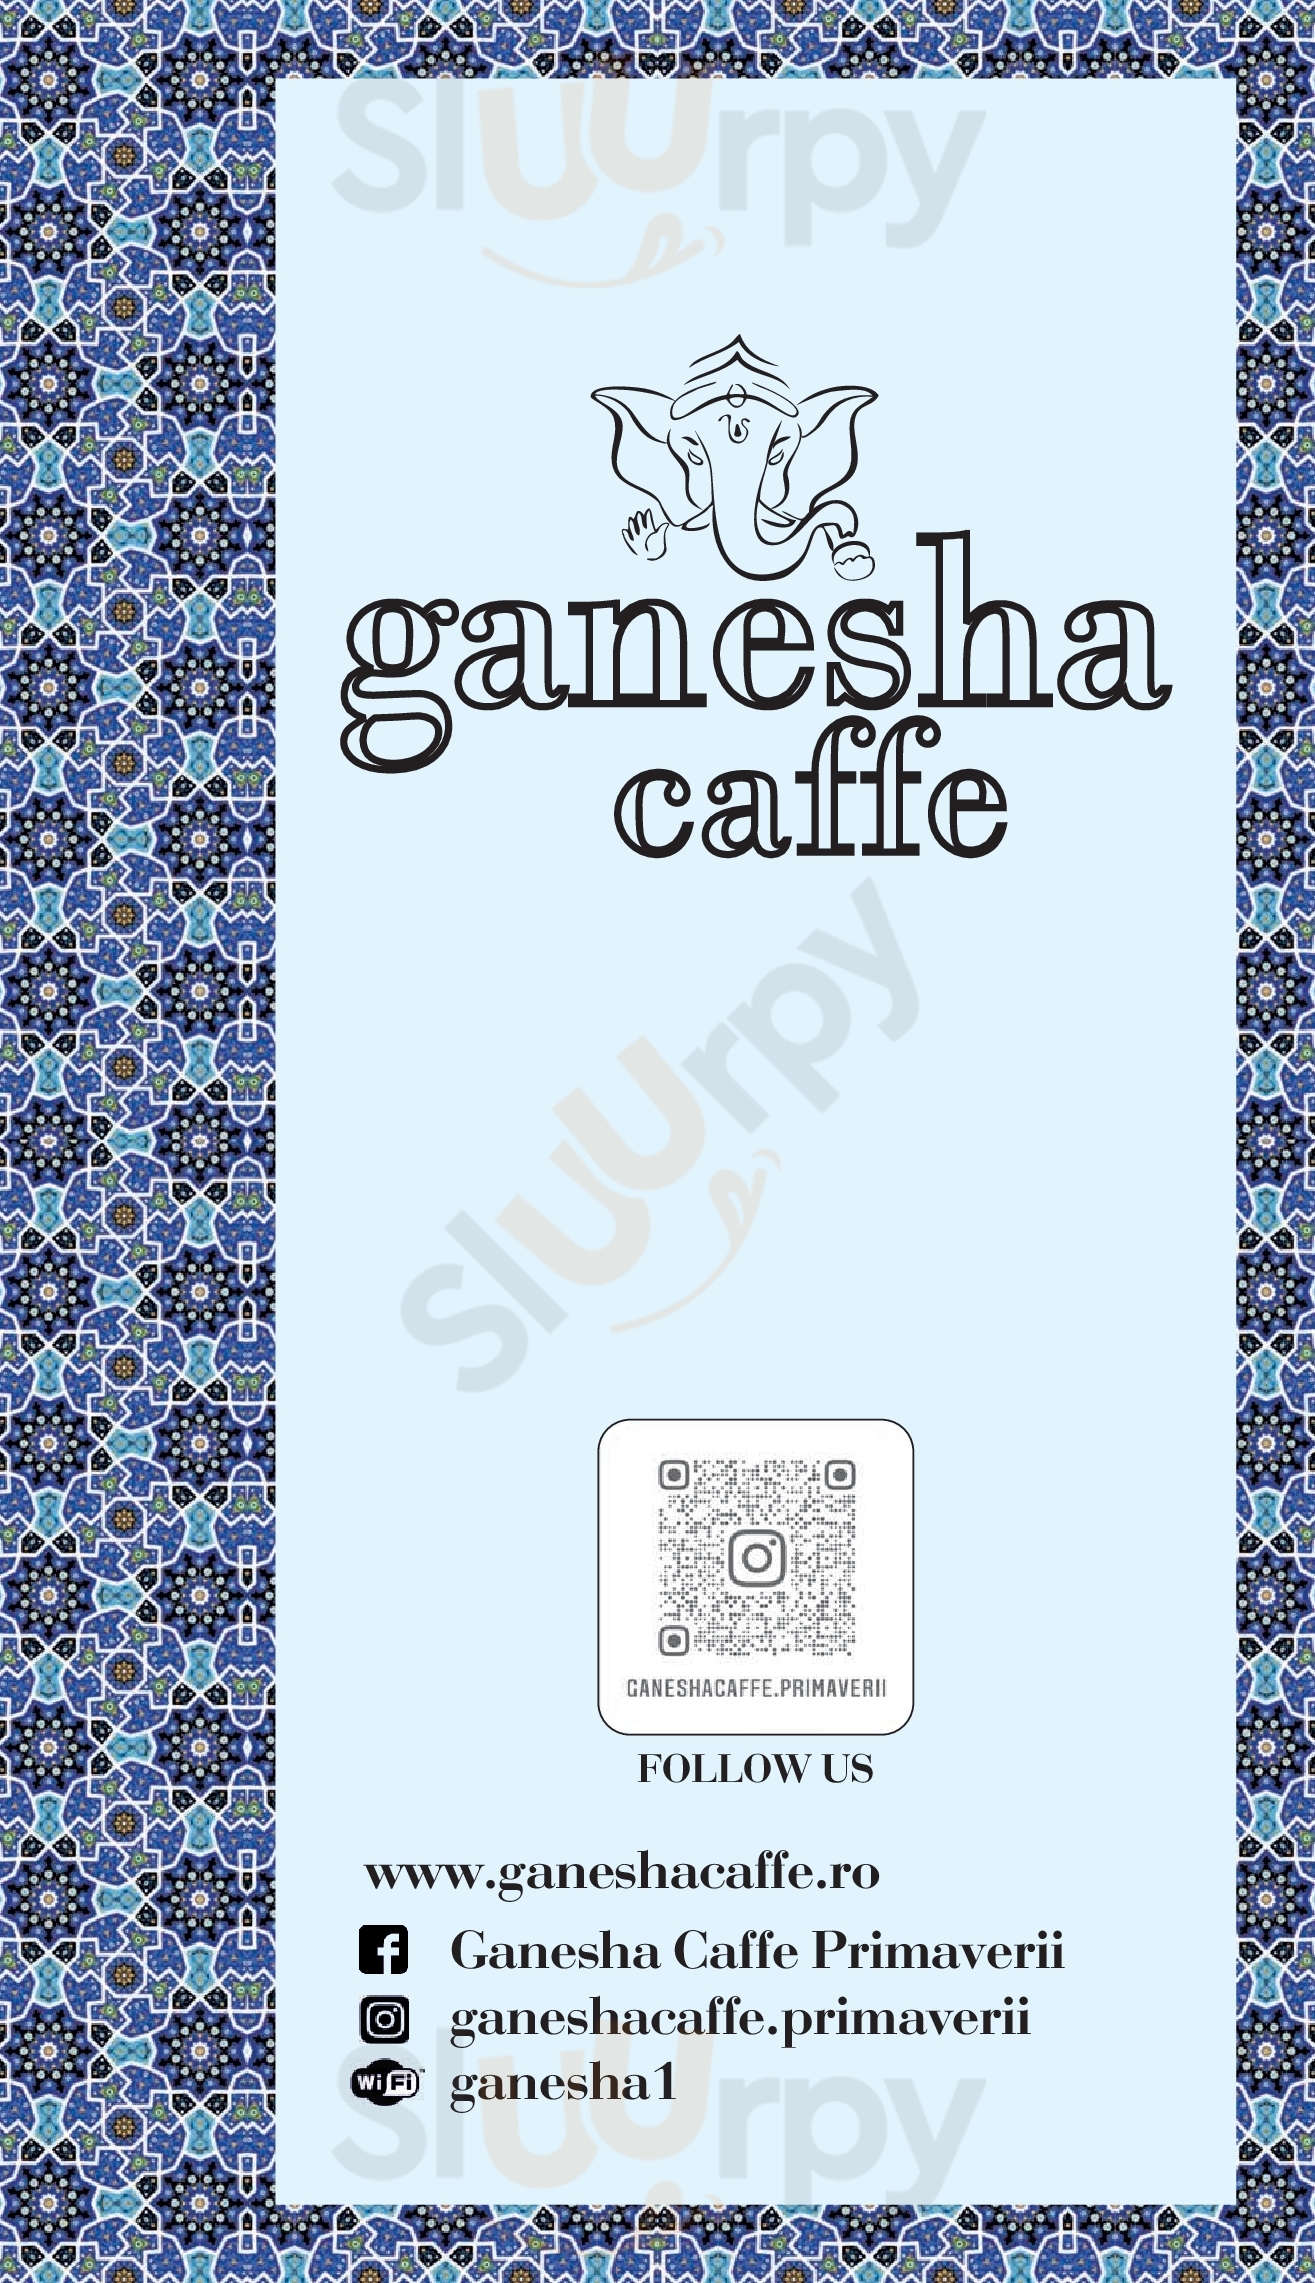 Ganesha Caffe - Primaverii Bucharest Menu - 1